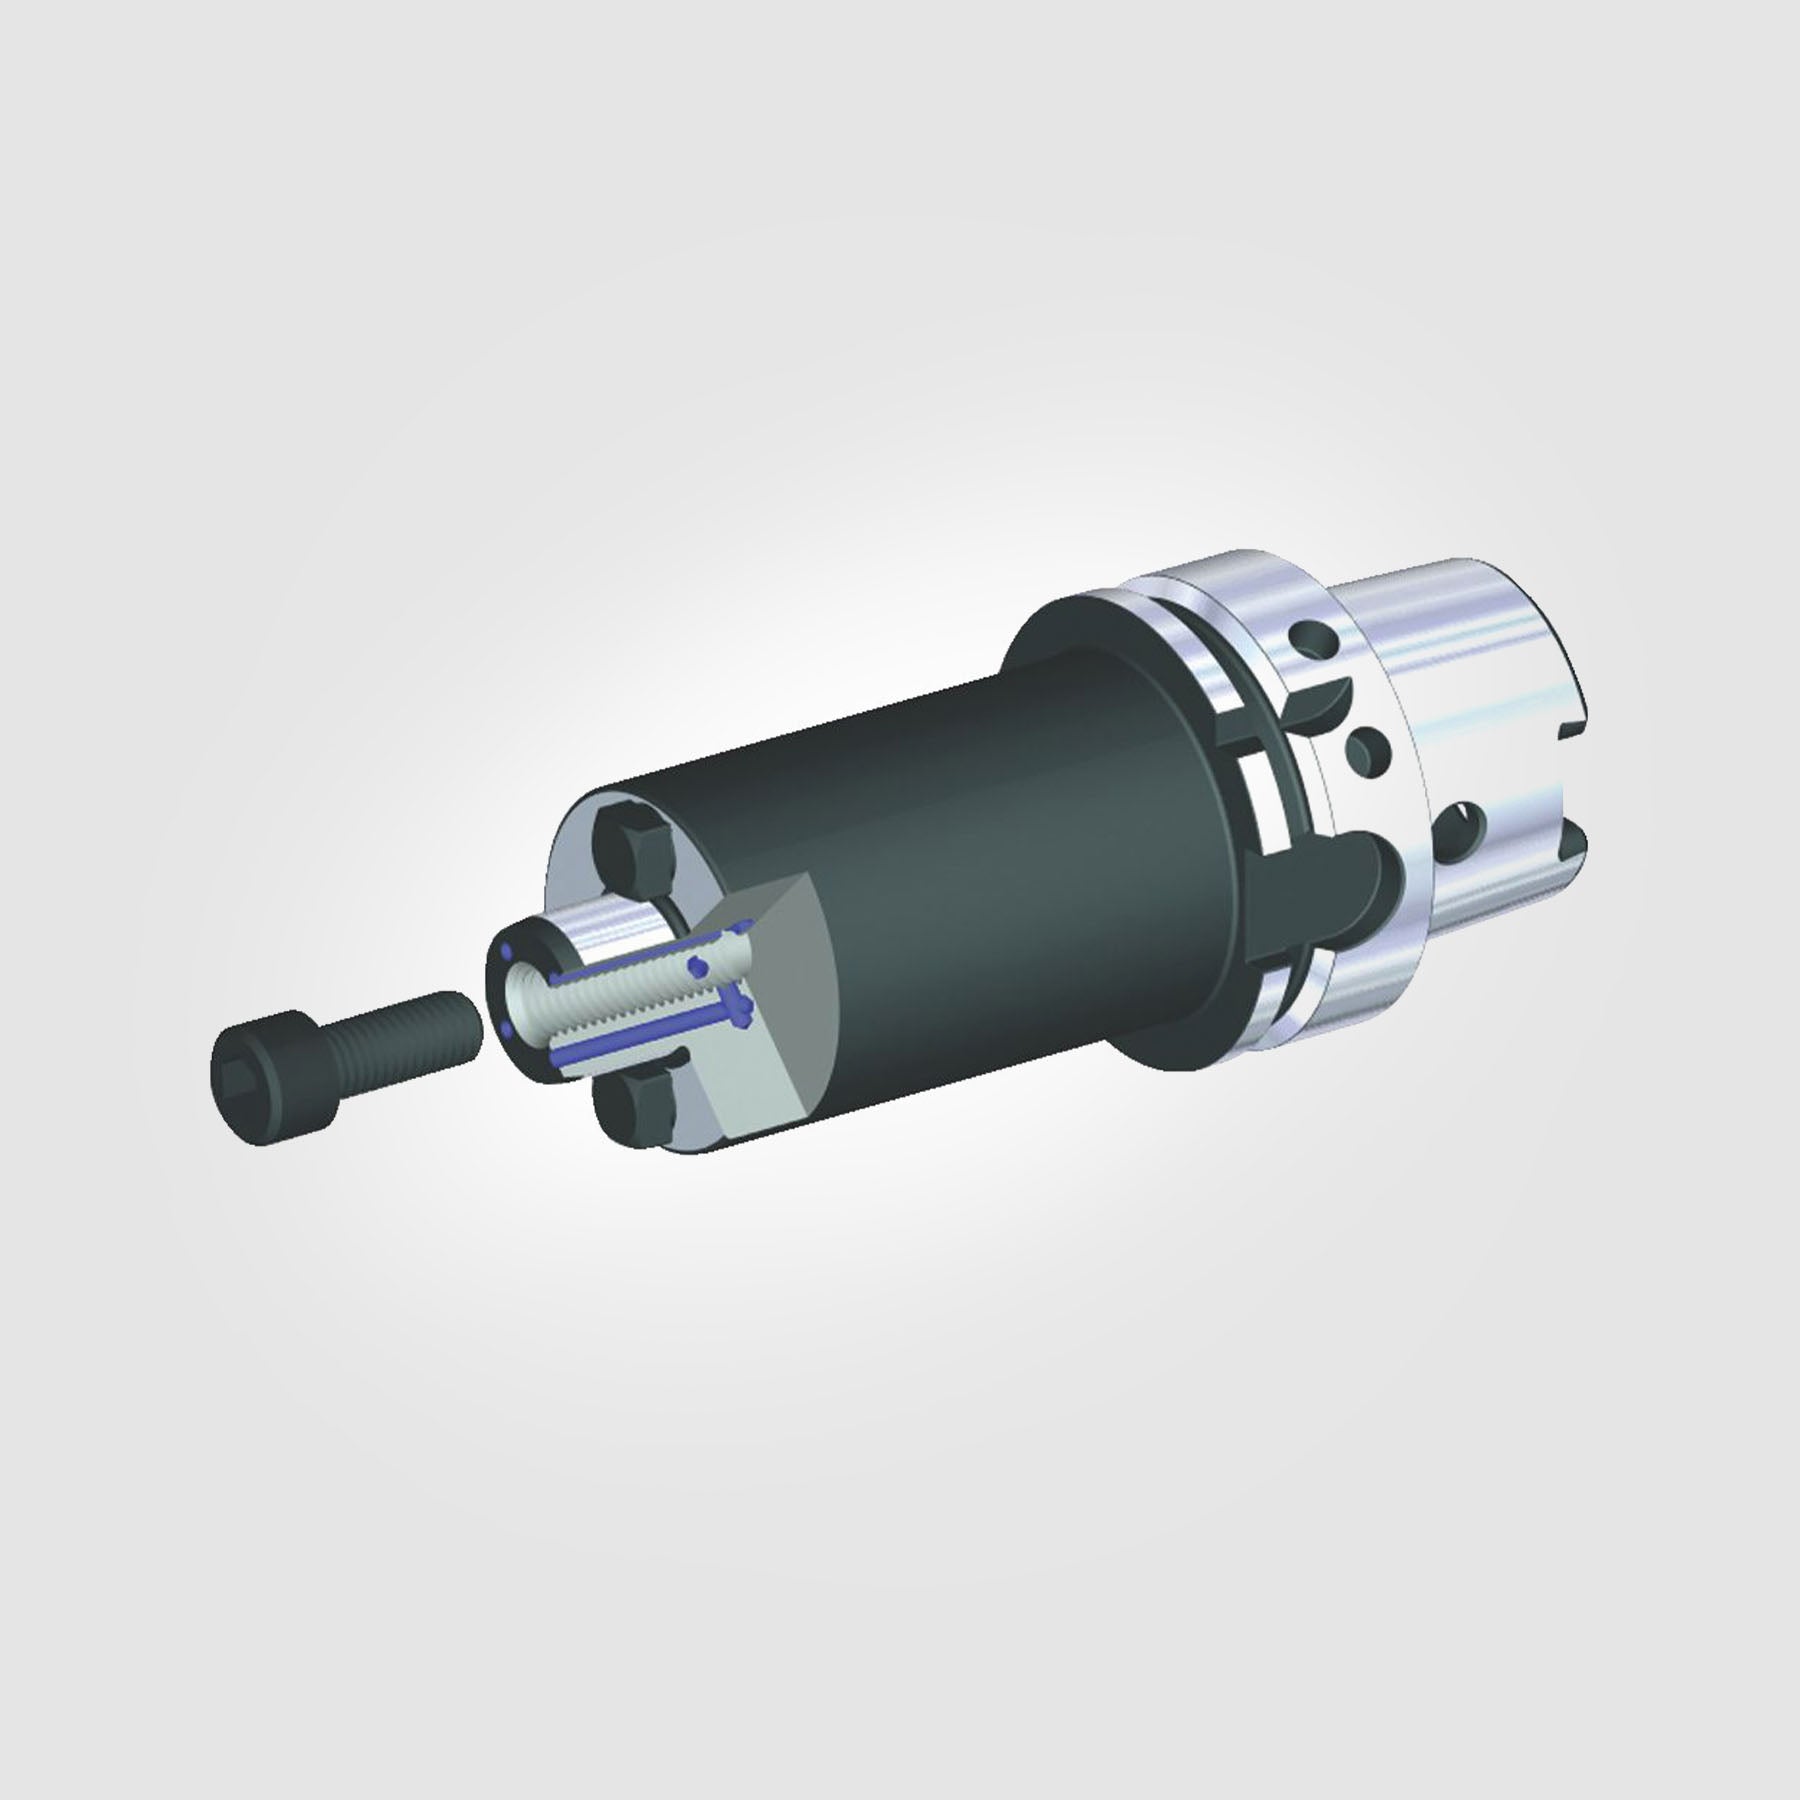 HSK100A Taper Shank 40mm Shell Mill Adapter (THROUGH COOLANT) | 3872508